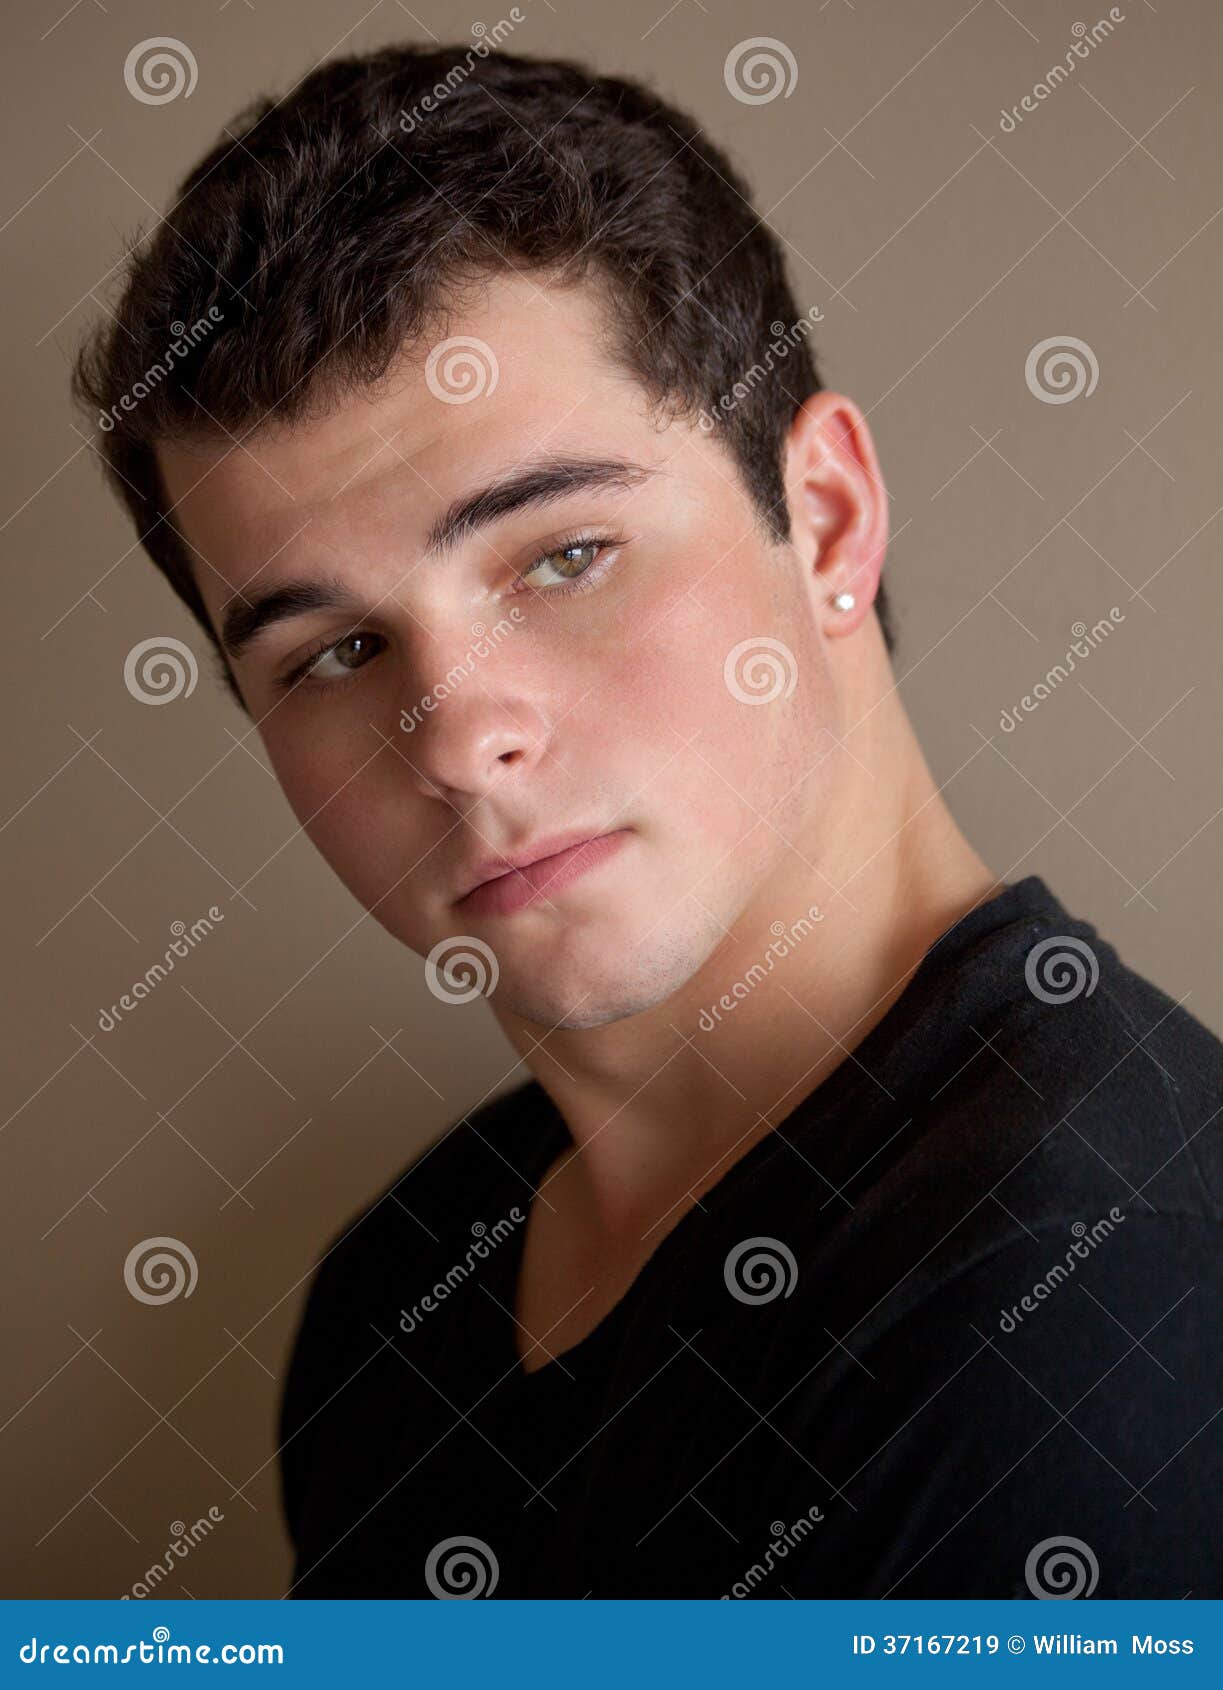 Green Eyed Teenage Boy stock image. Image of face, earring - 37167219